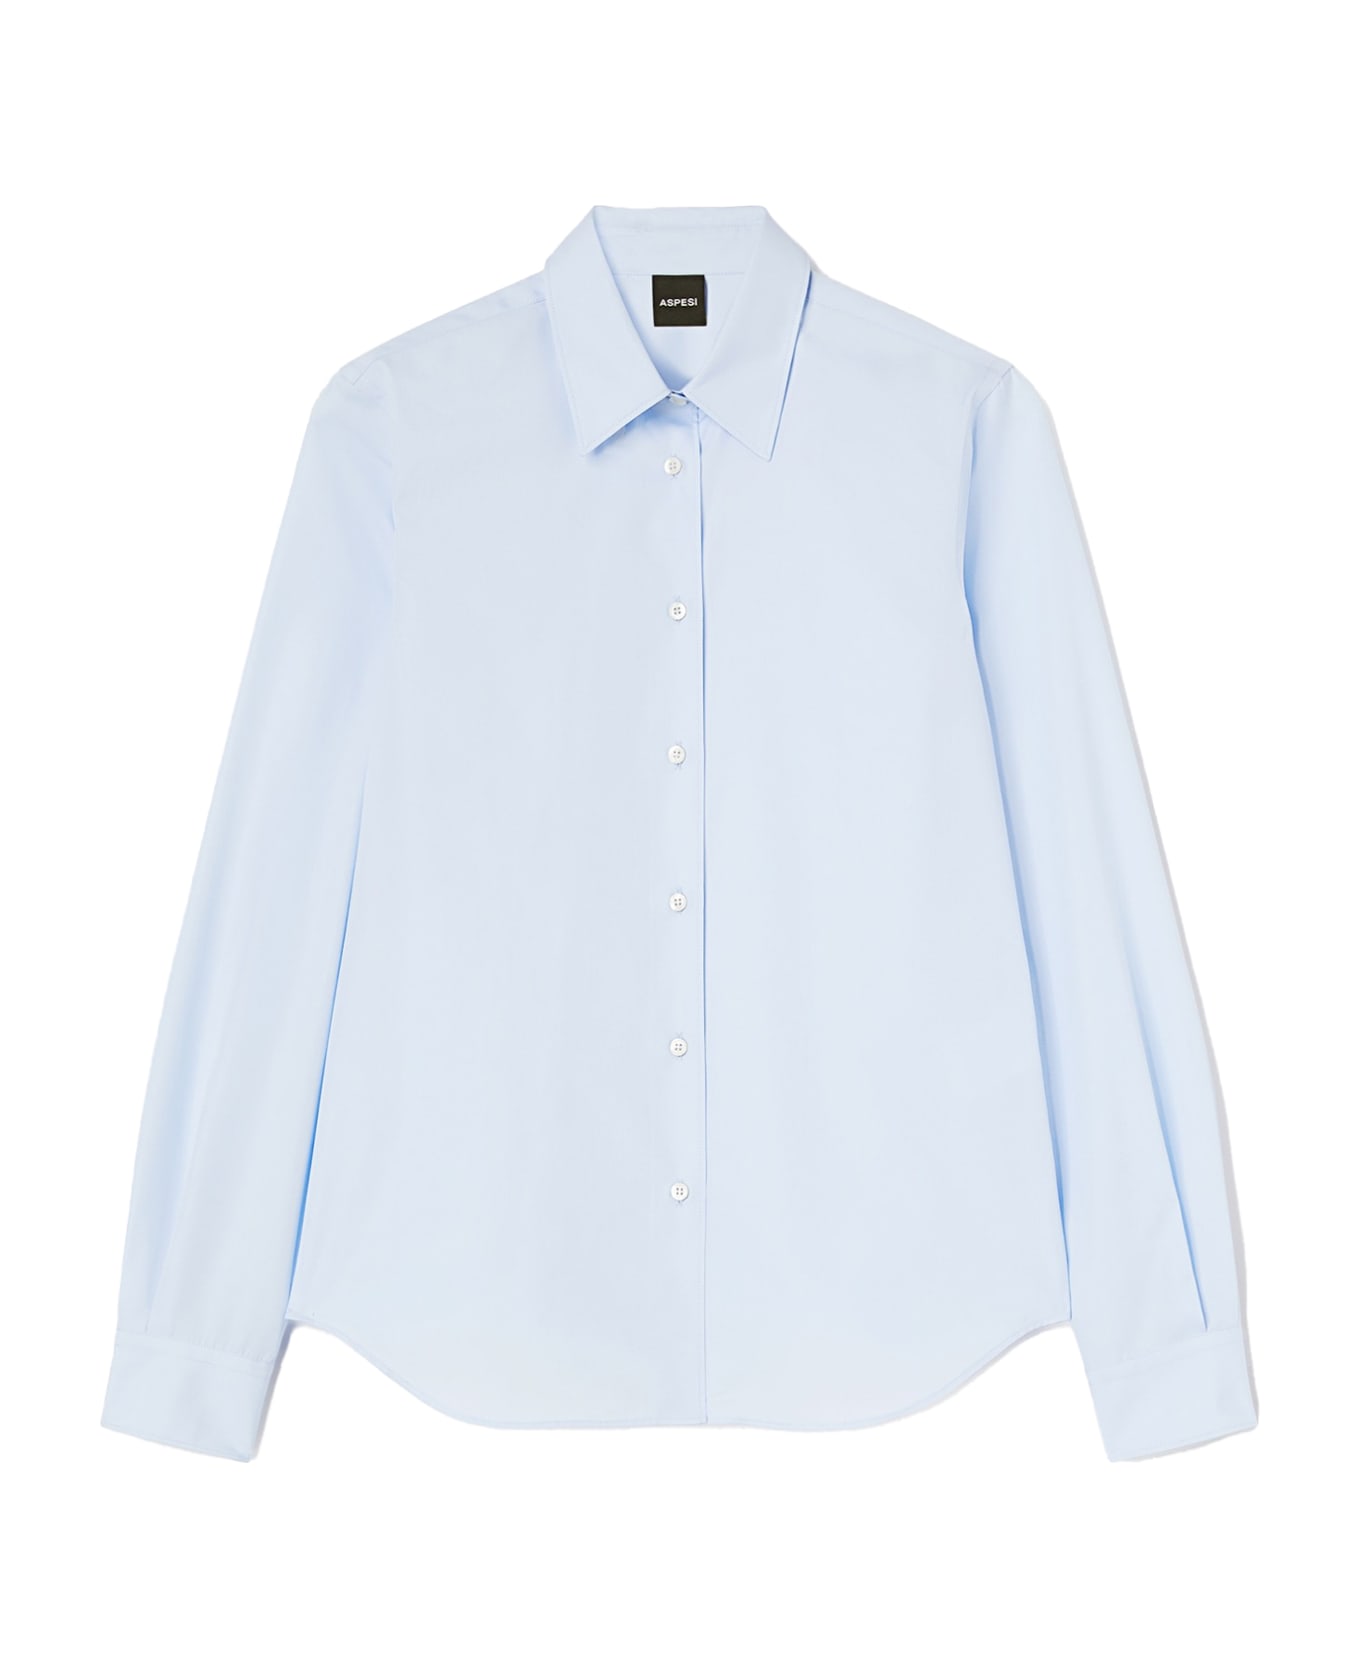 Aspesi Light Blue Shirt With Long Sleeves - AZZURRO シャツ